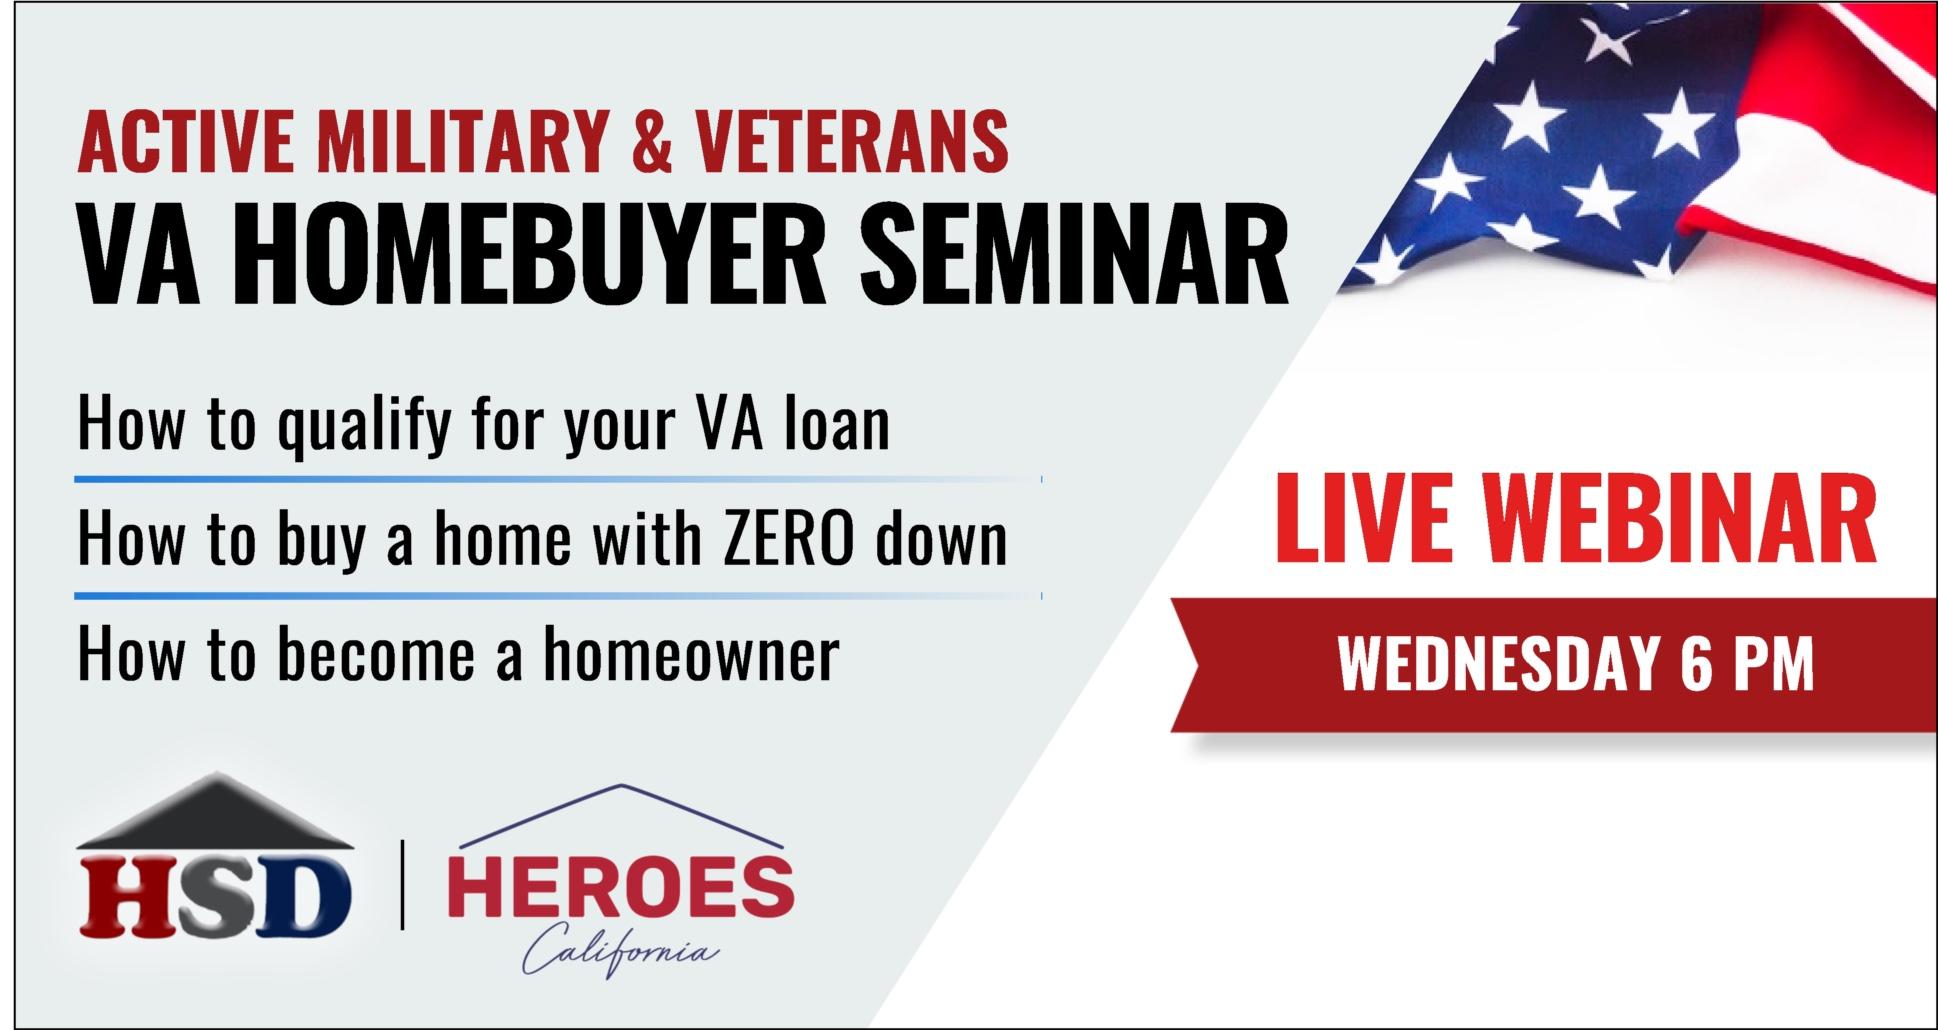 Active Military & Veterans VA Homebuyer Webinar